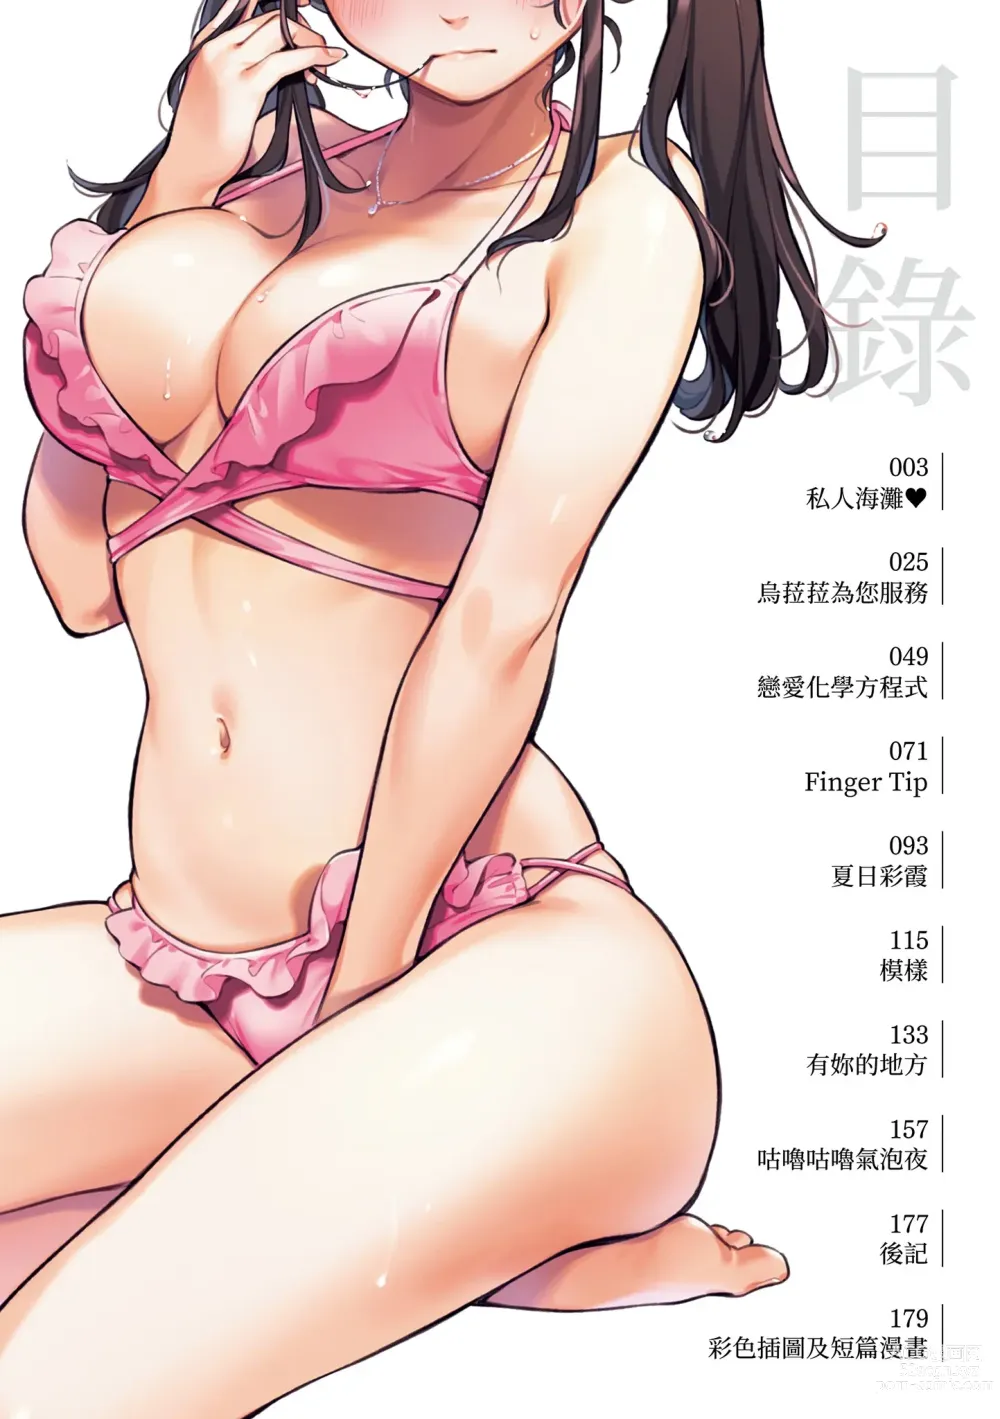 Page 3 of manga 謝謝招待 (decensored)